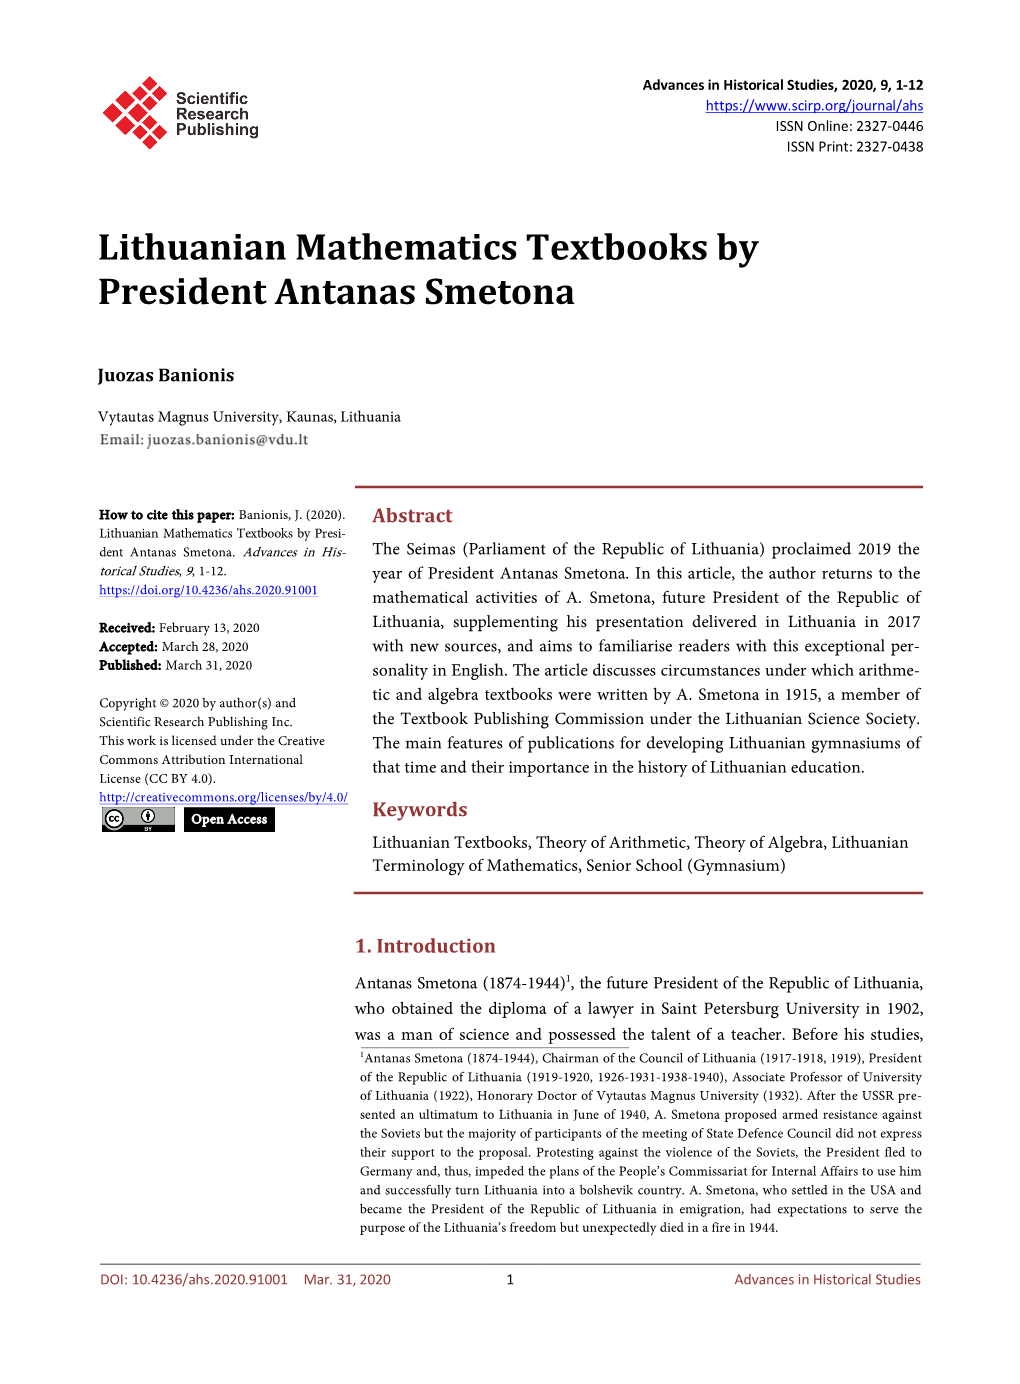 Lithuanian Mathematics Textbooks by President Antanas Smetona